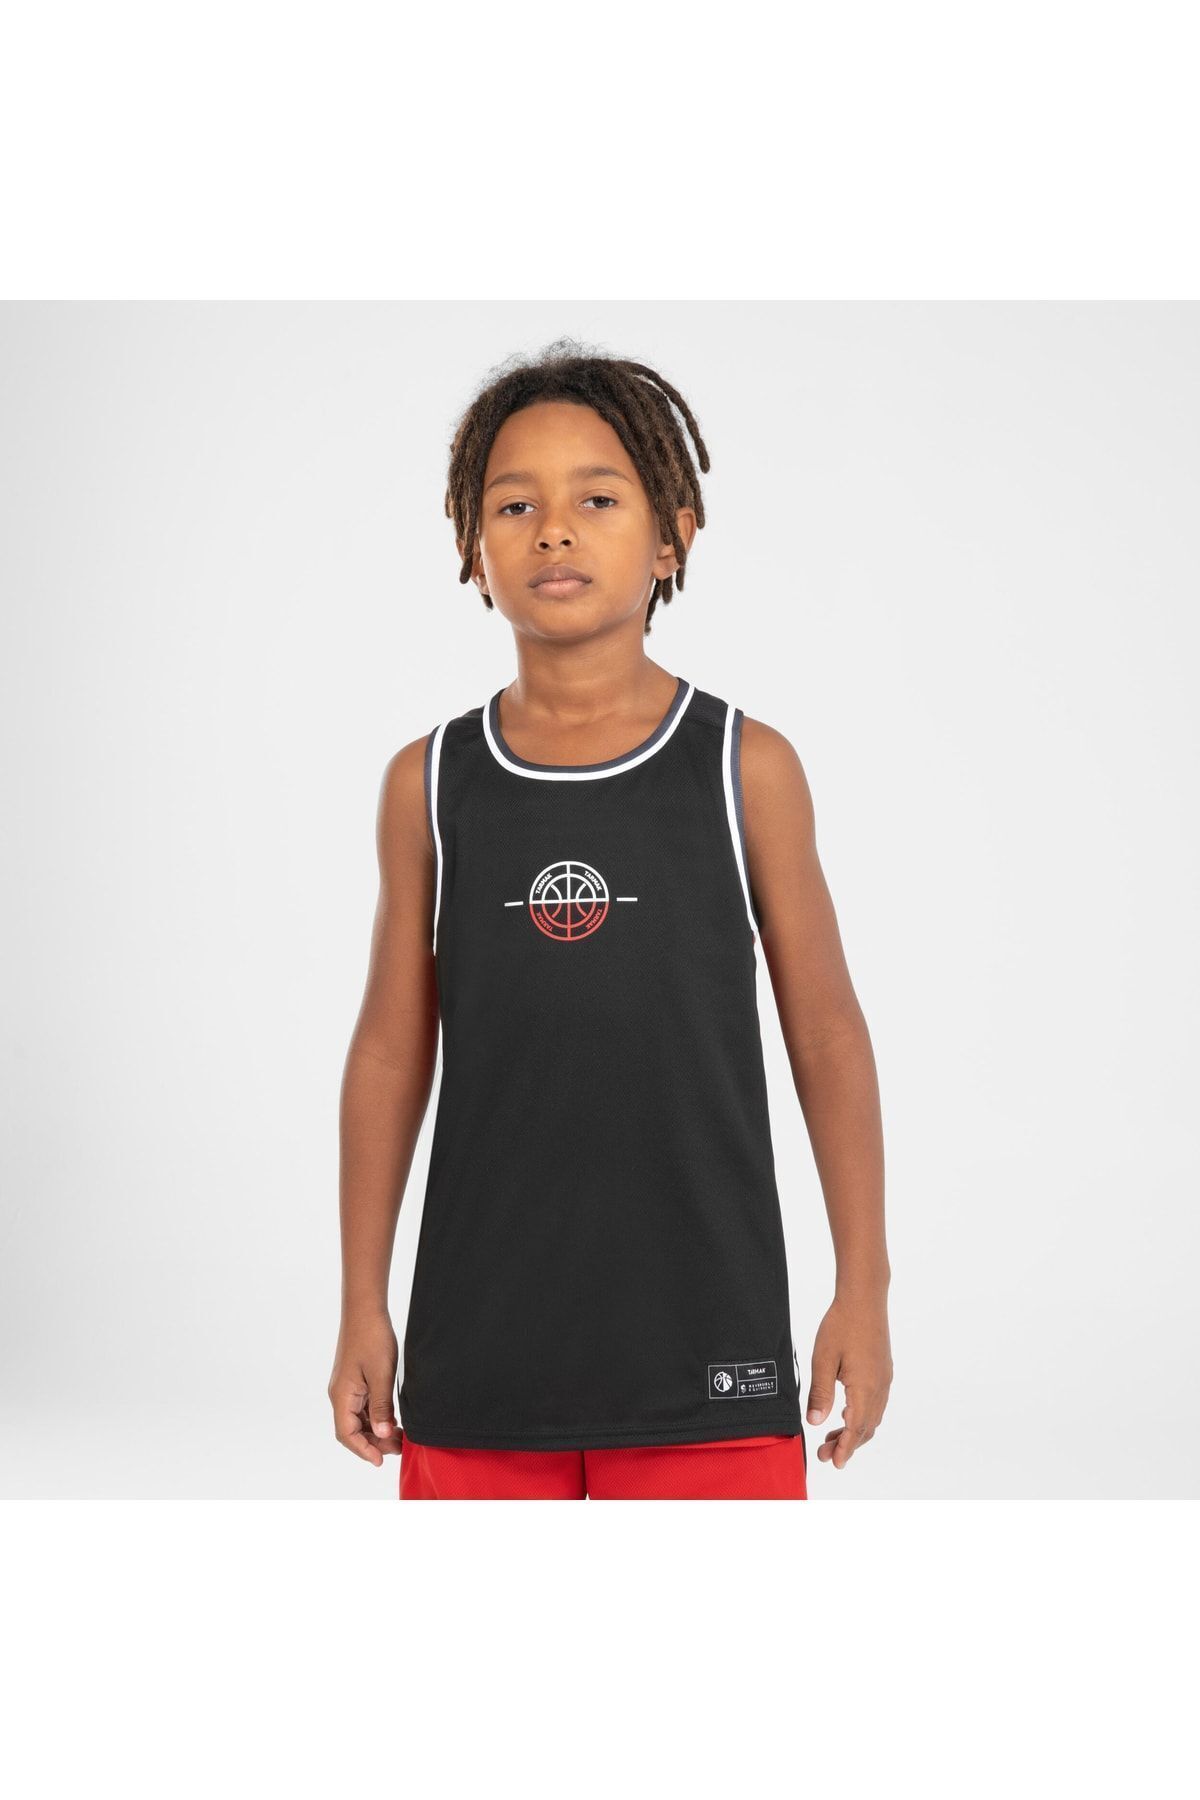 Decathlon Tarmak Çocuk Çift Taraflı Kolsuz Basketbol Forması  Siyah Kırmızı T500r